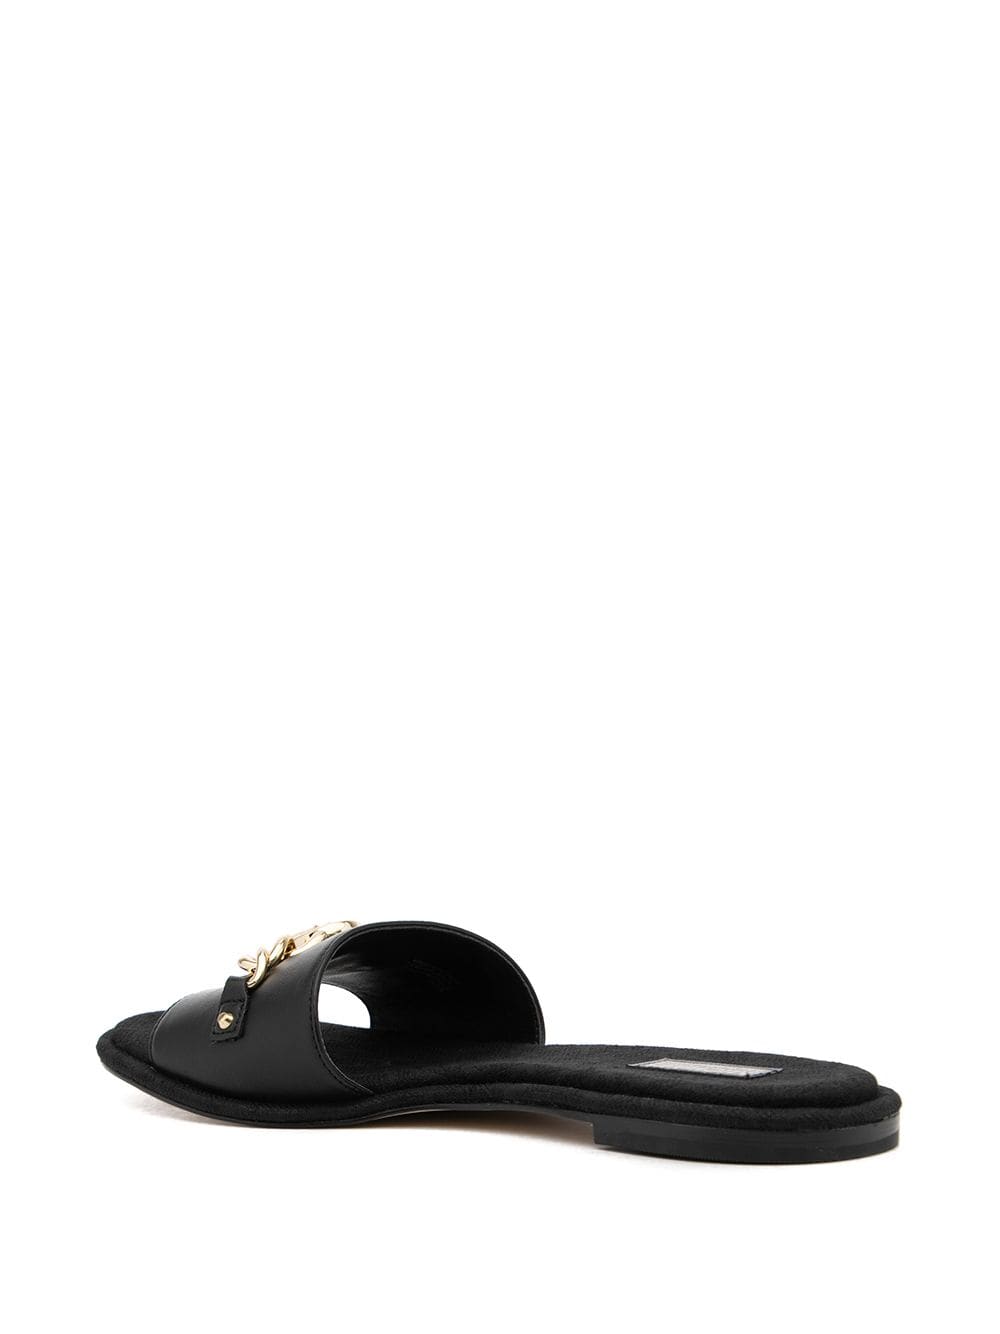 Michael Kors Rina chain-link detail sandals Black